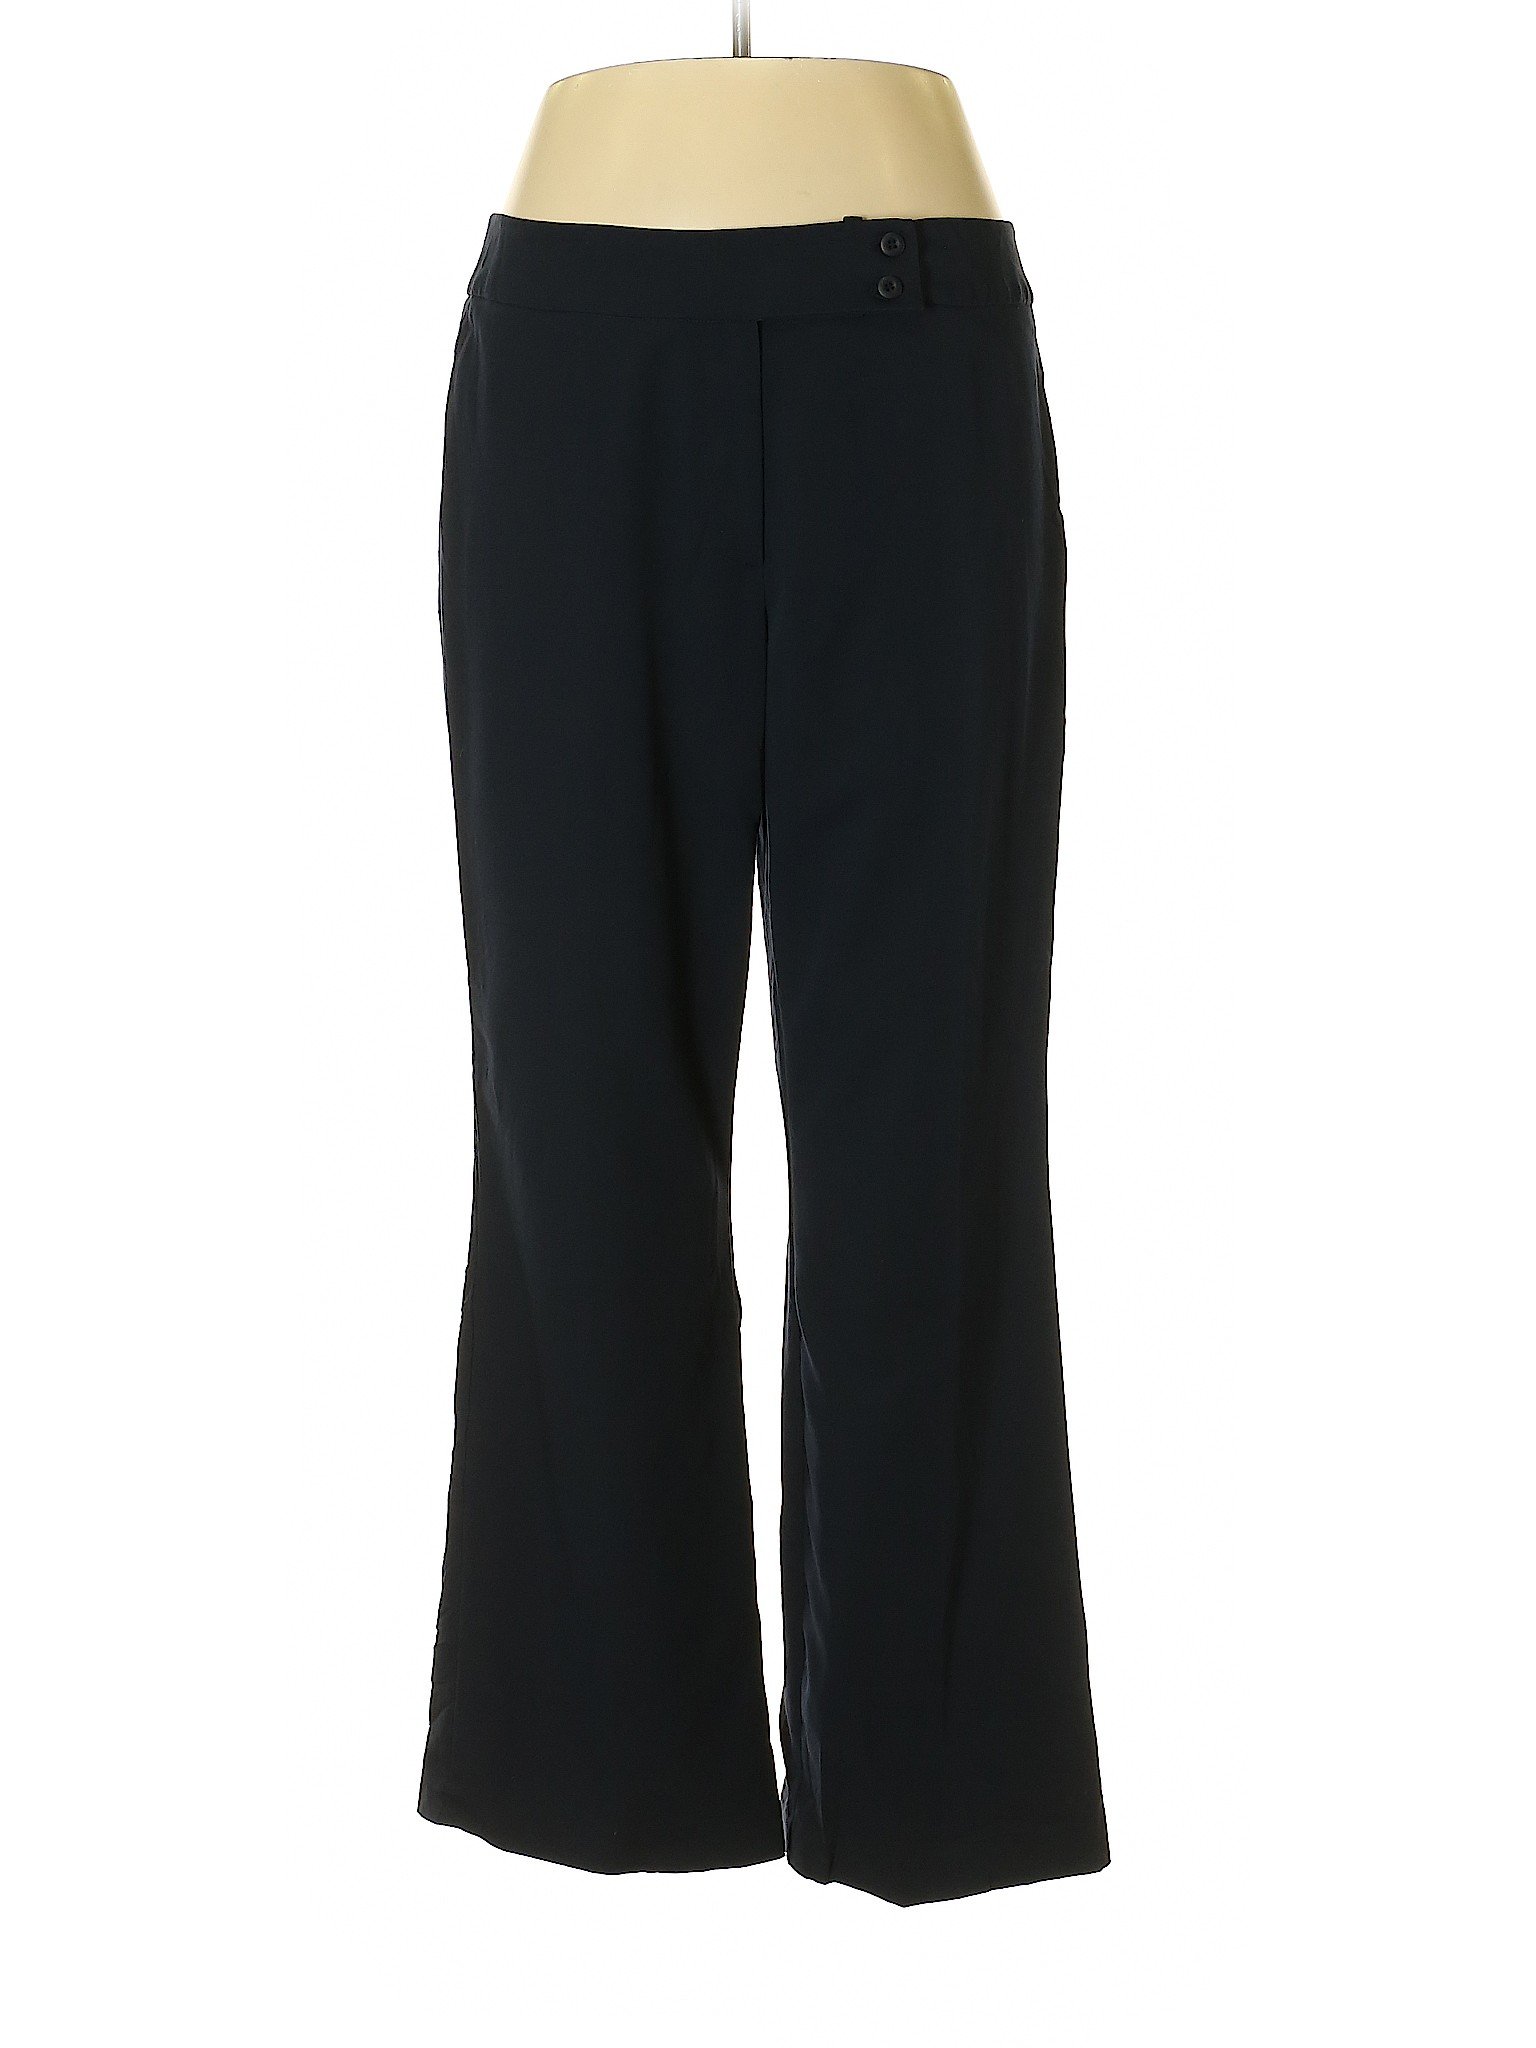 Haggar Women Black Dress Pants 16 | eBay